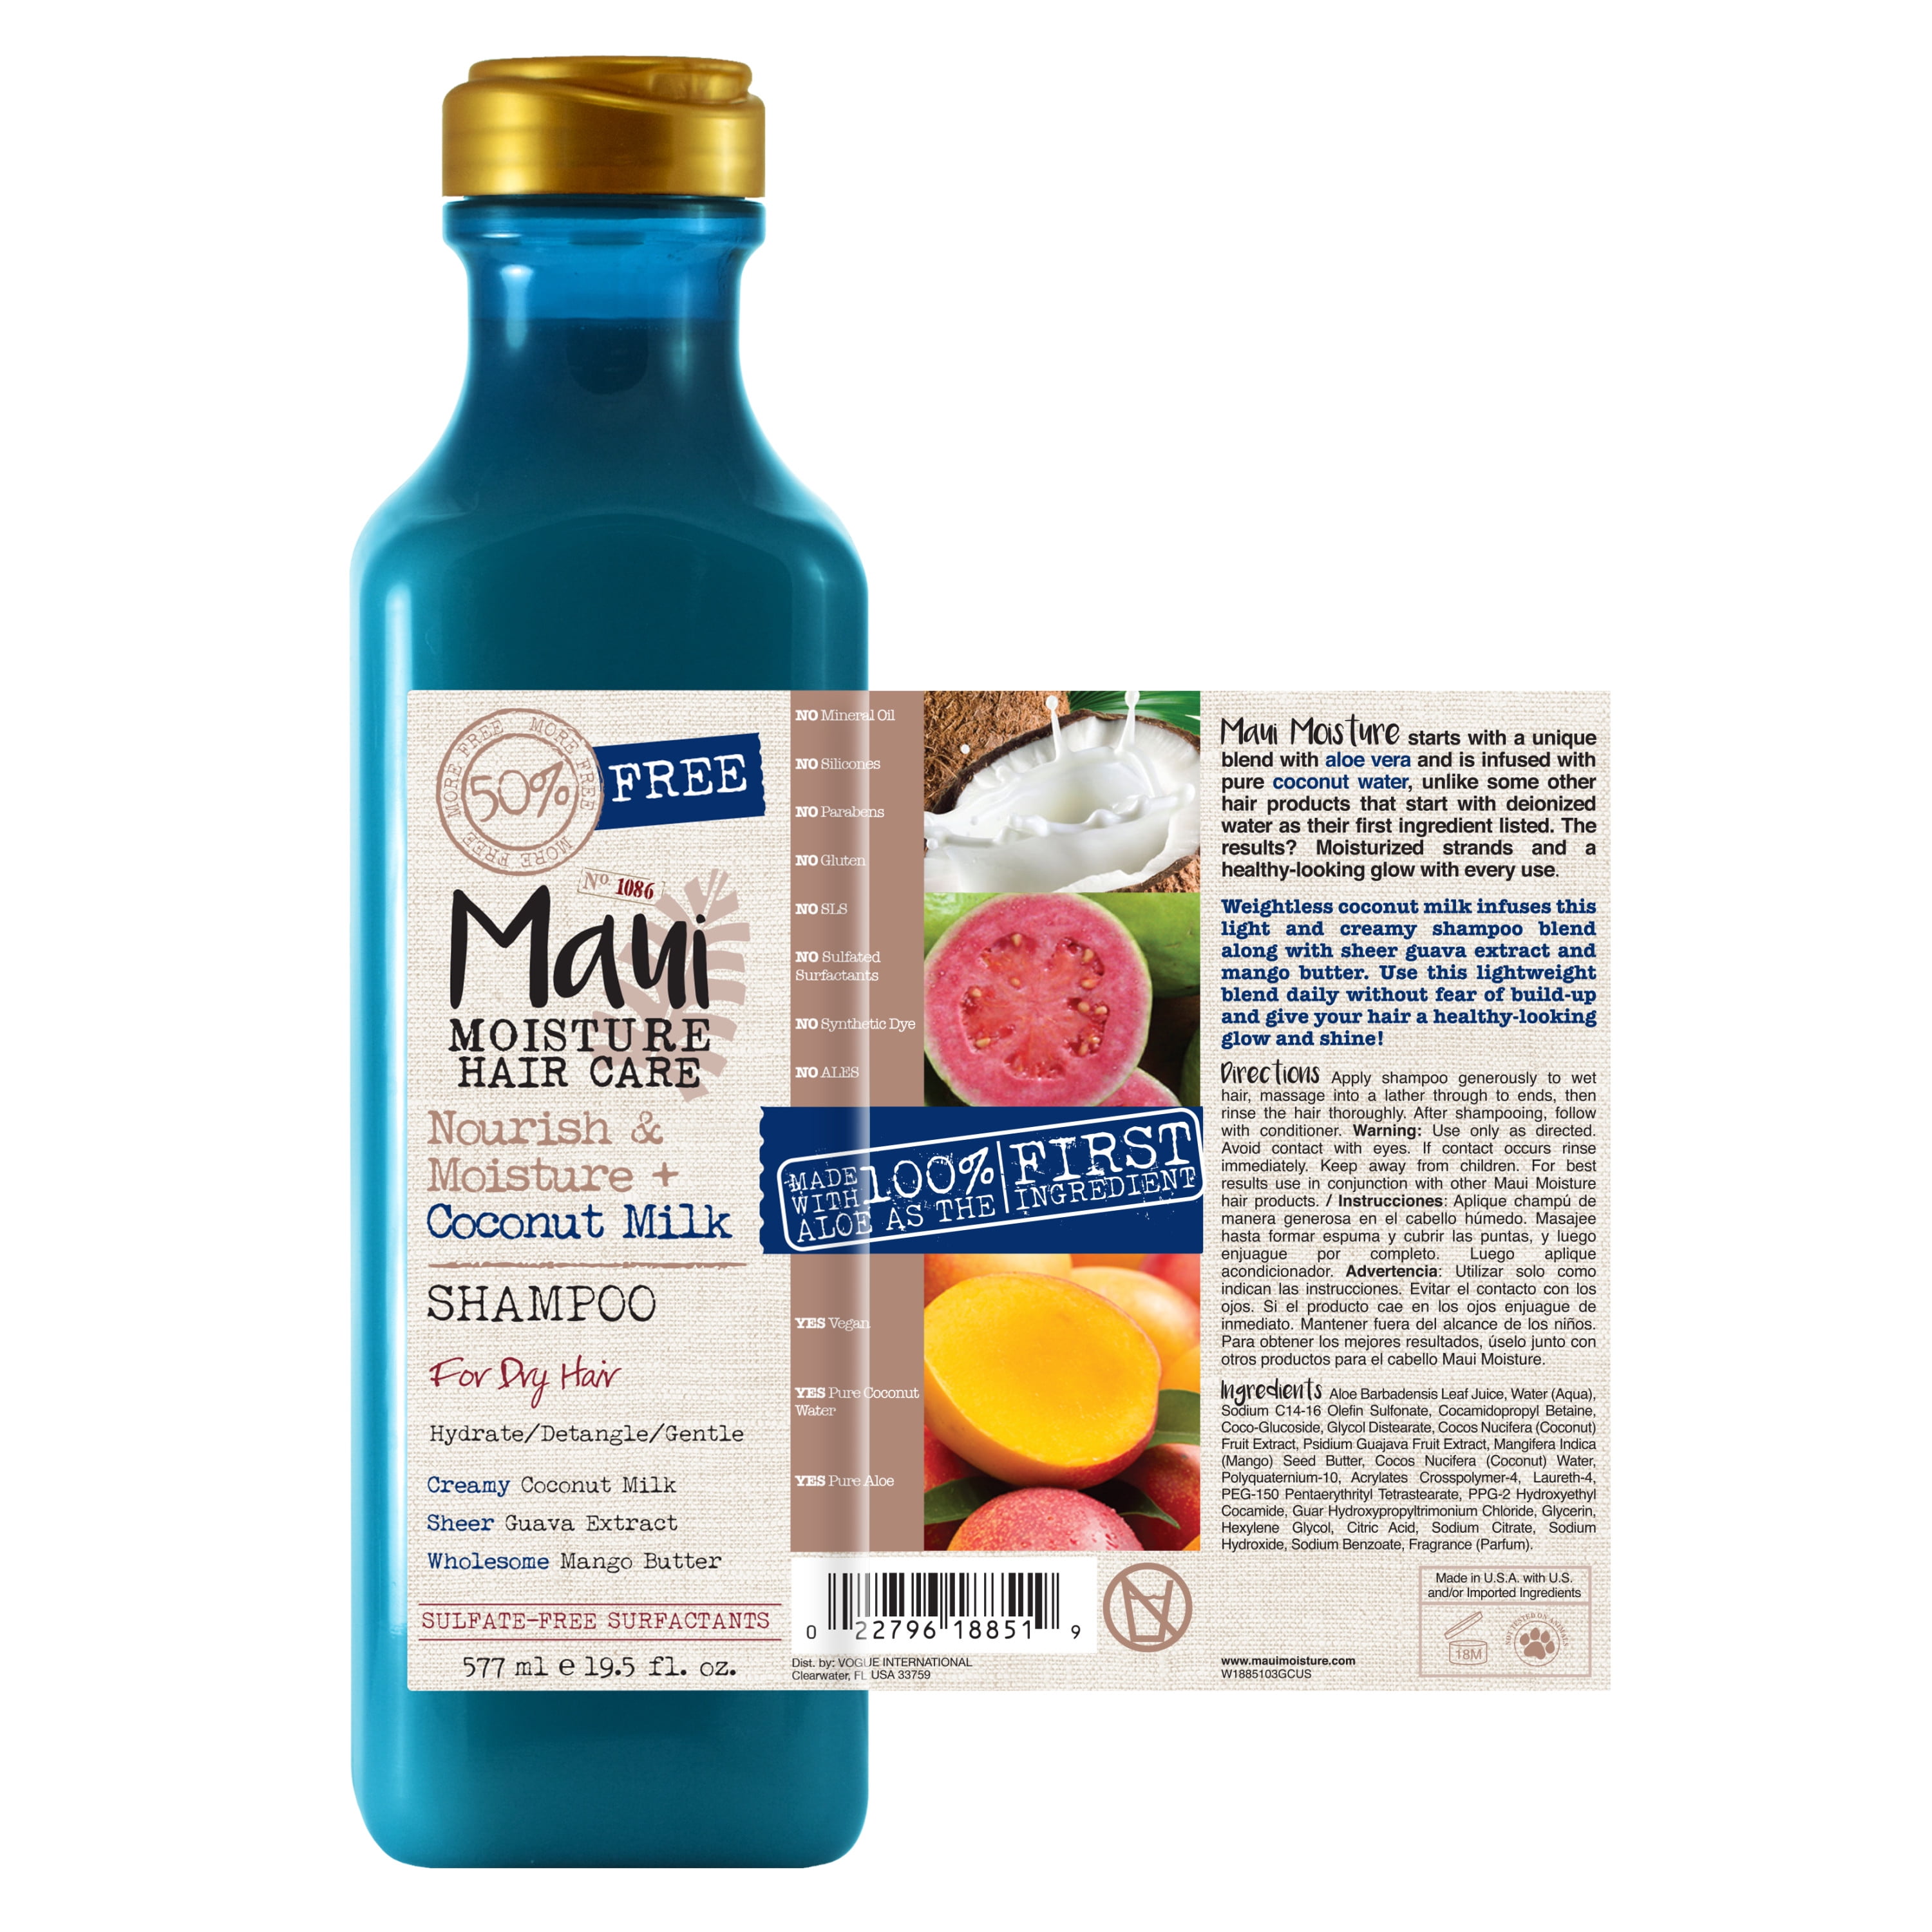 Maui Moisture Nourish & Moisture + Coconut Milk Shampoo to Curly Hair, 19.5 fl oz - Walmart.com